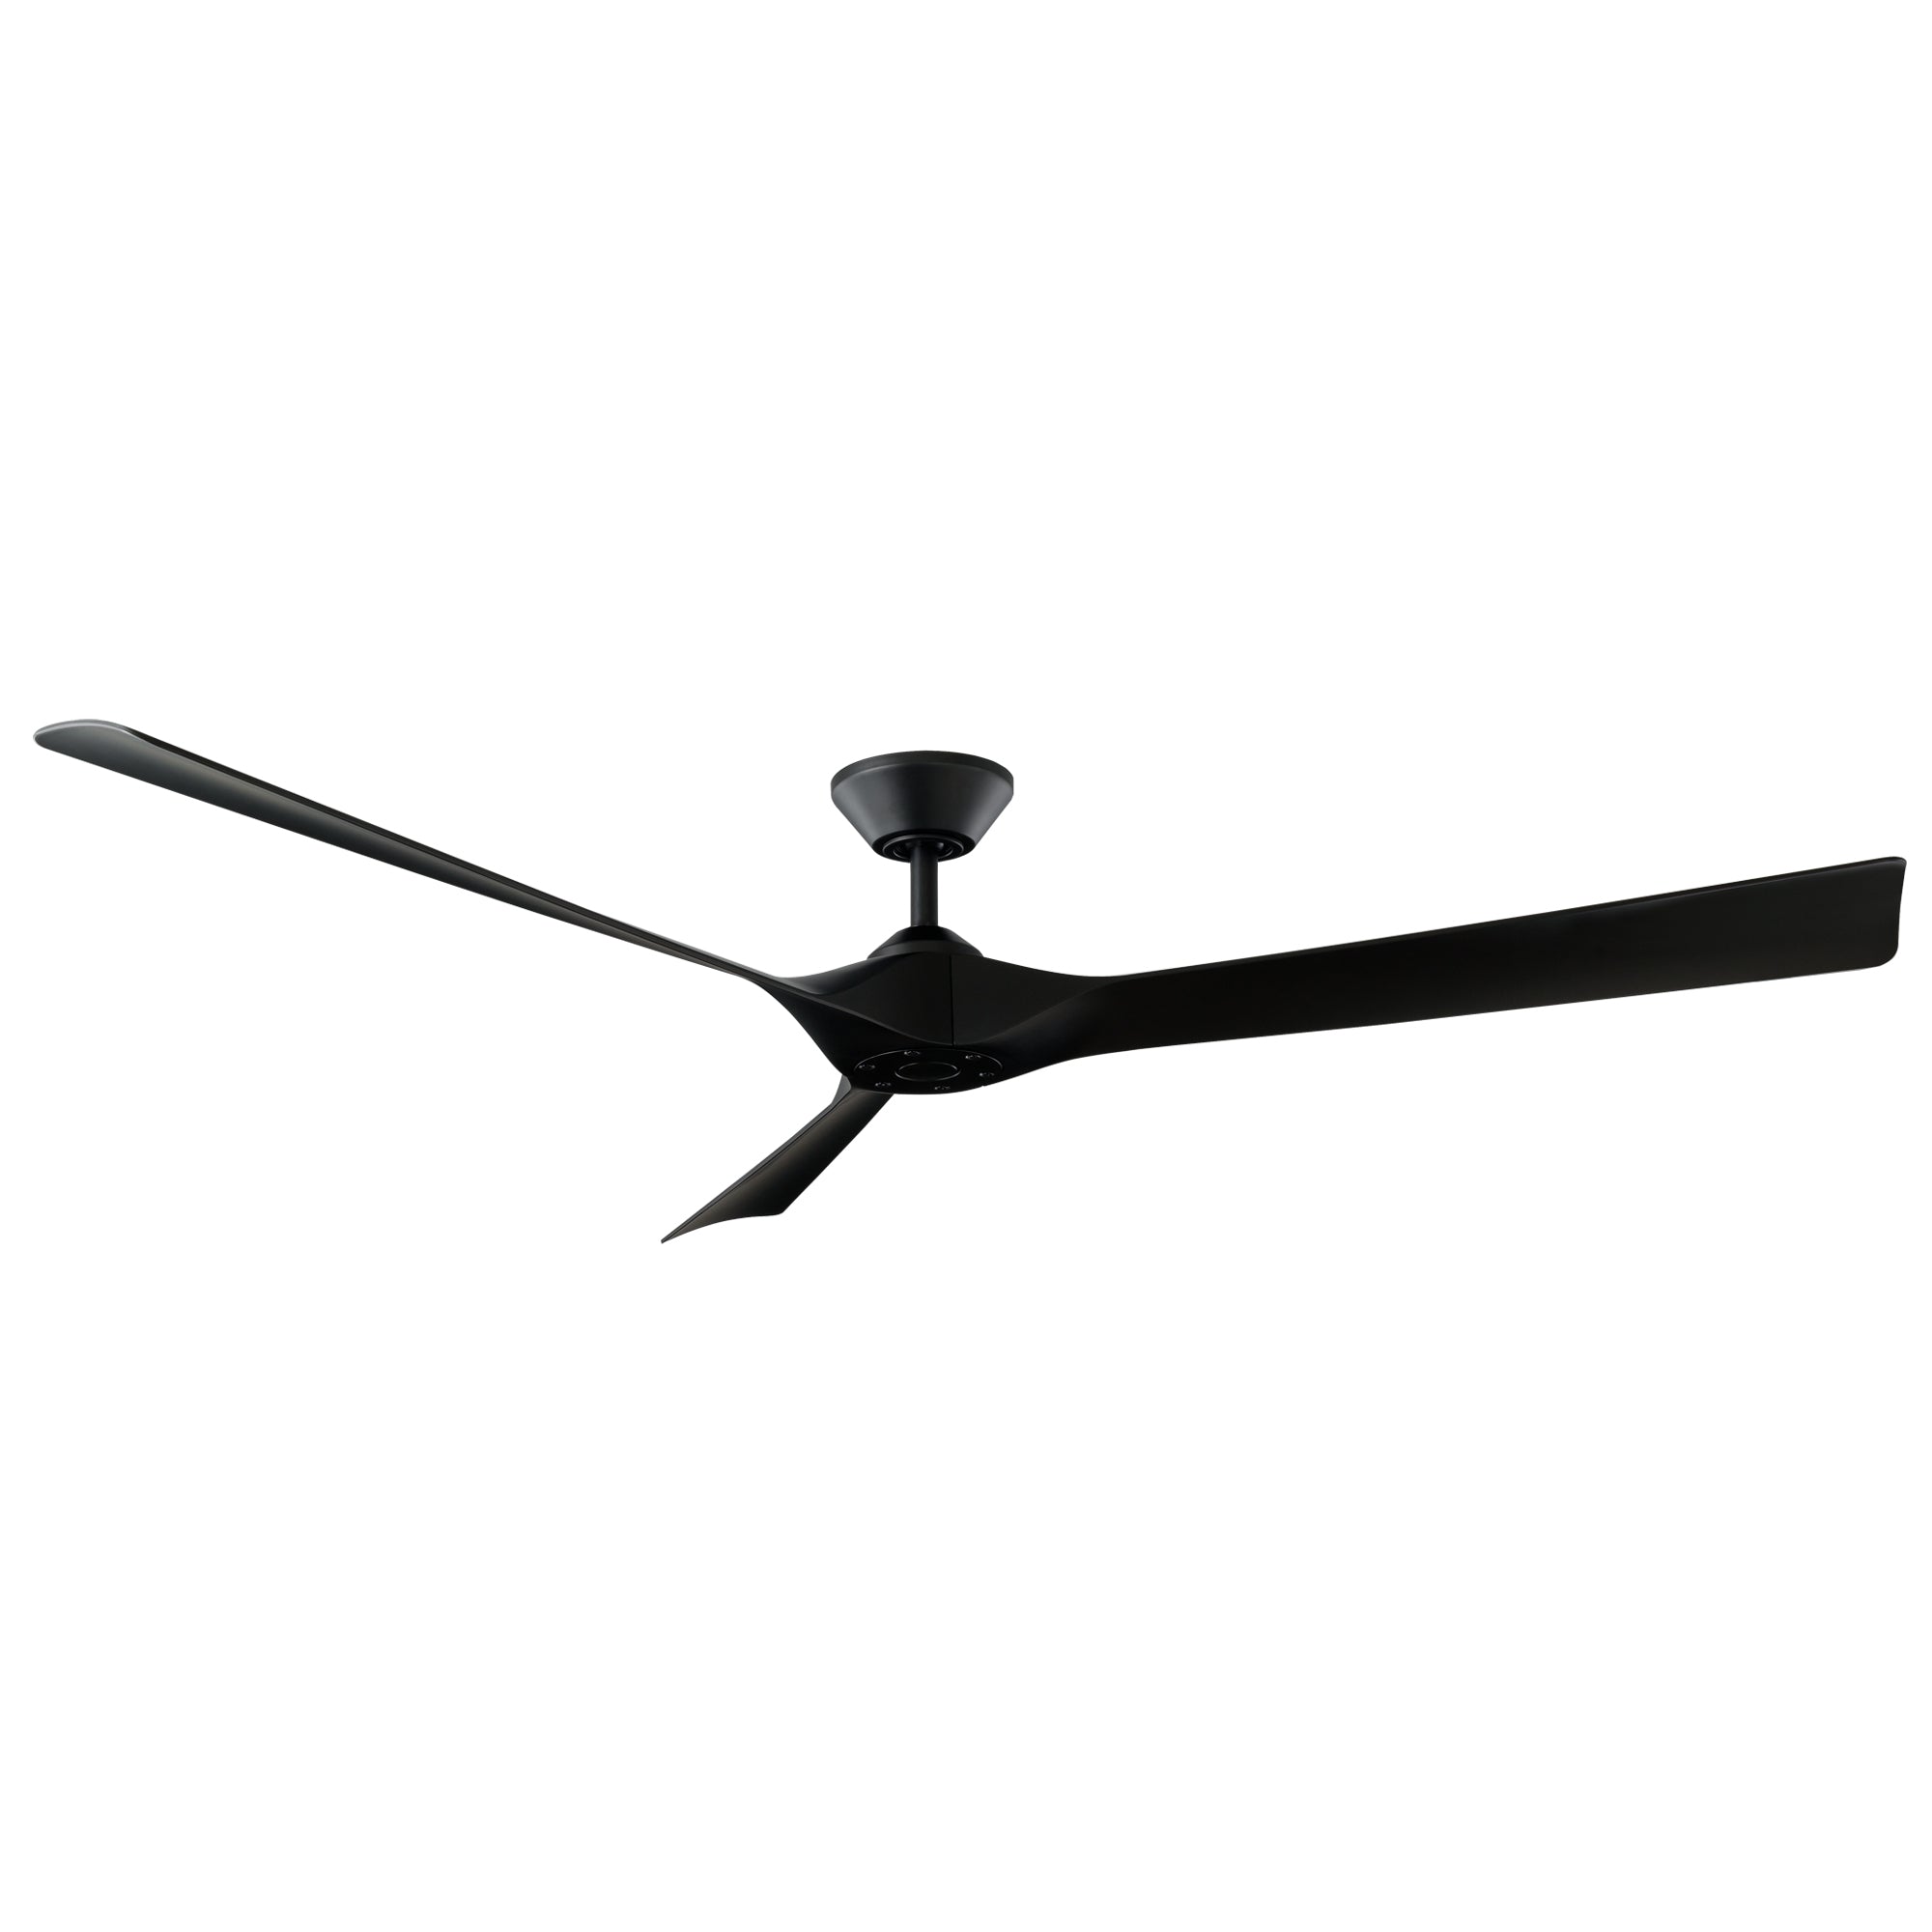 Torque Indoor/Outdoor 3-Blade 70" Smart Ceiling Fan with Remote Control